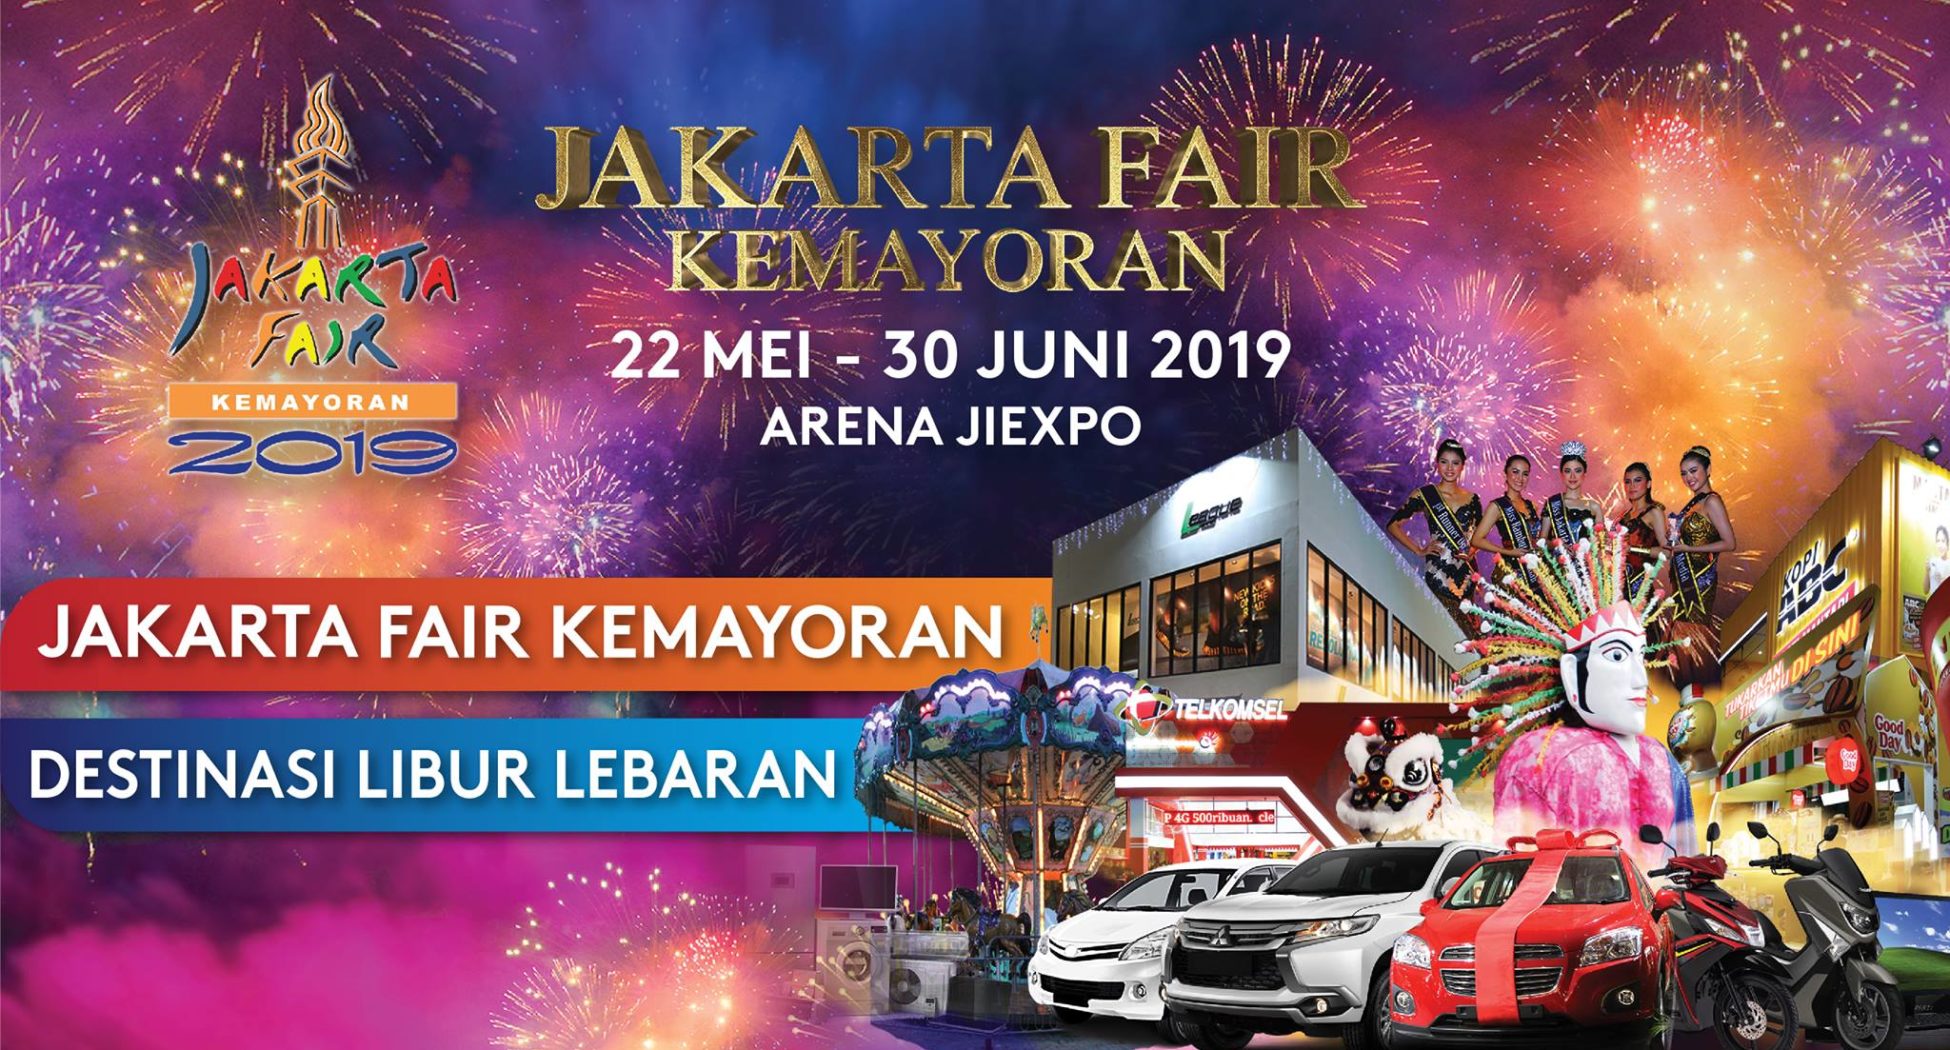 JAKARTA FAIR KEMAYORAN 2019